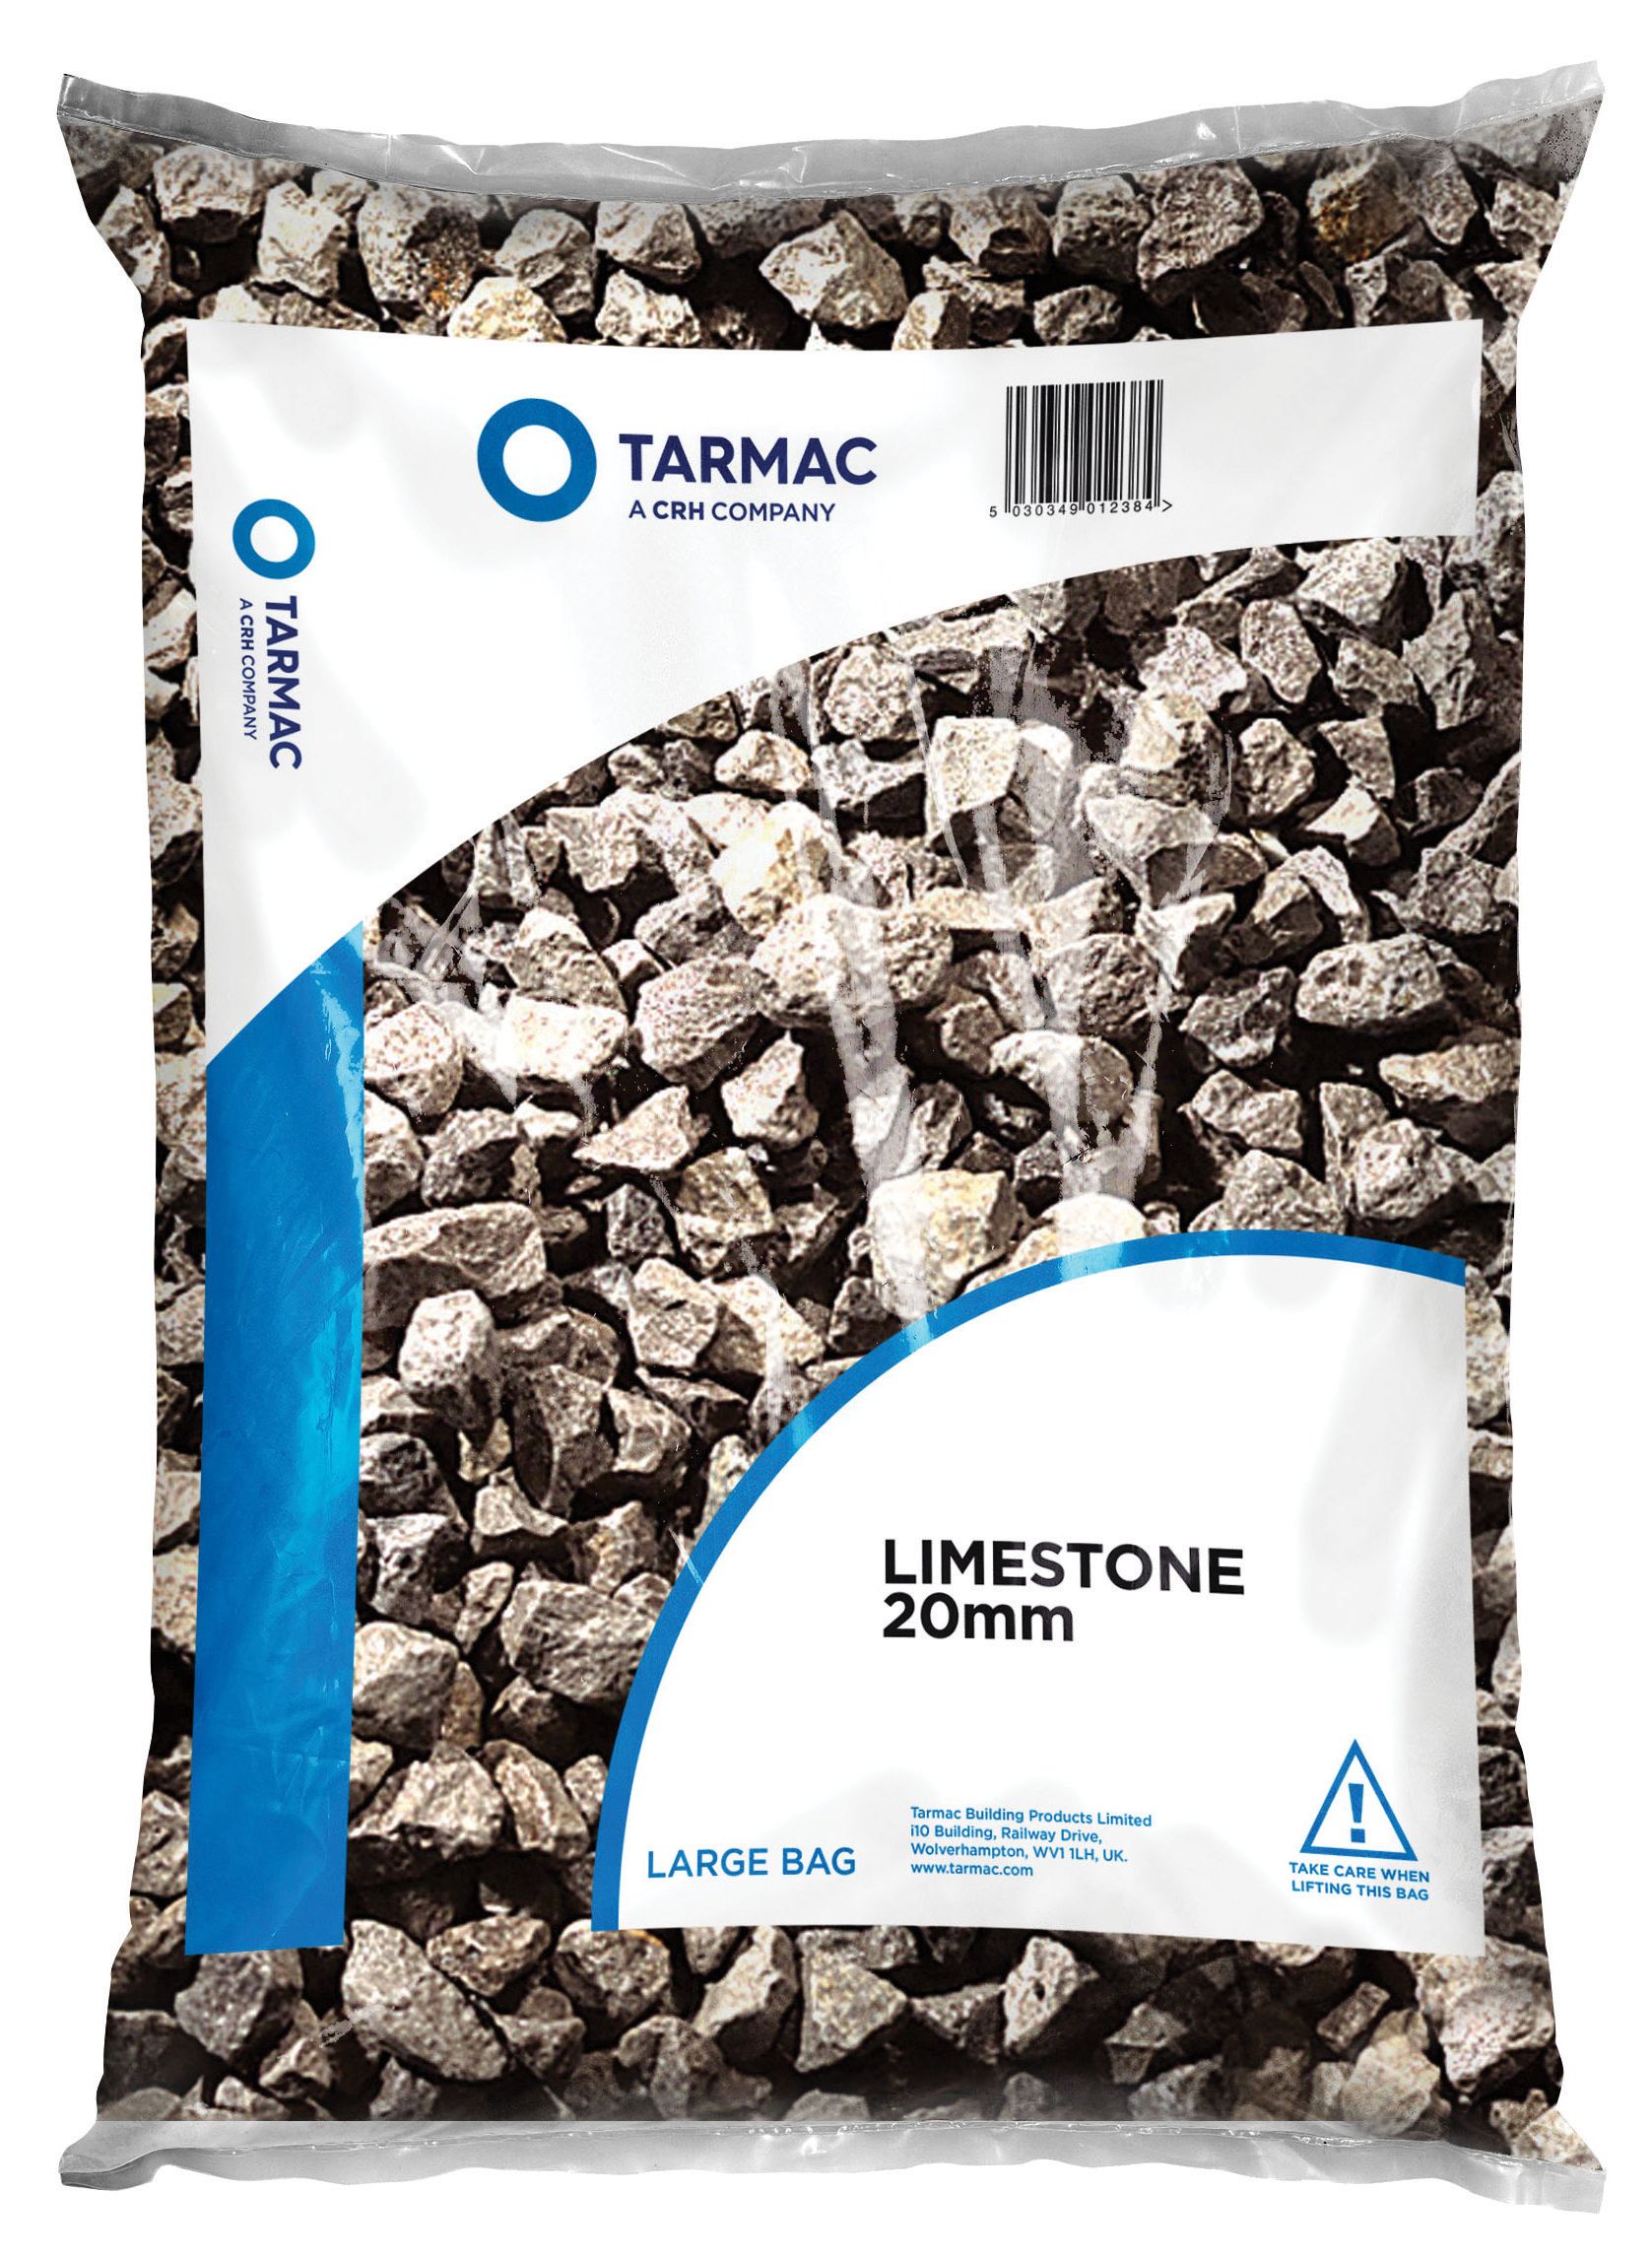 Image of Tarmac 20mm Limestone Chippings - Major Bag